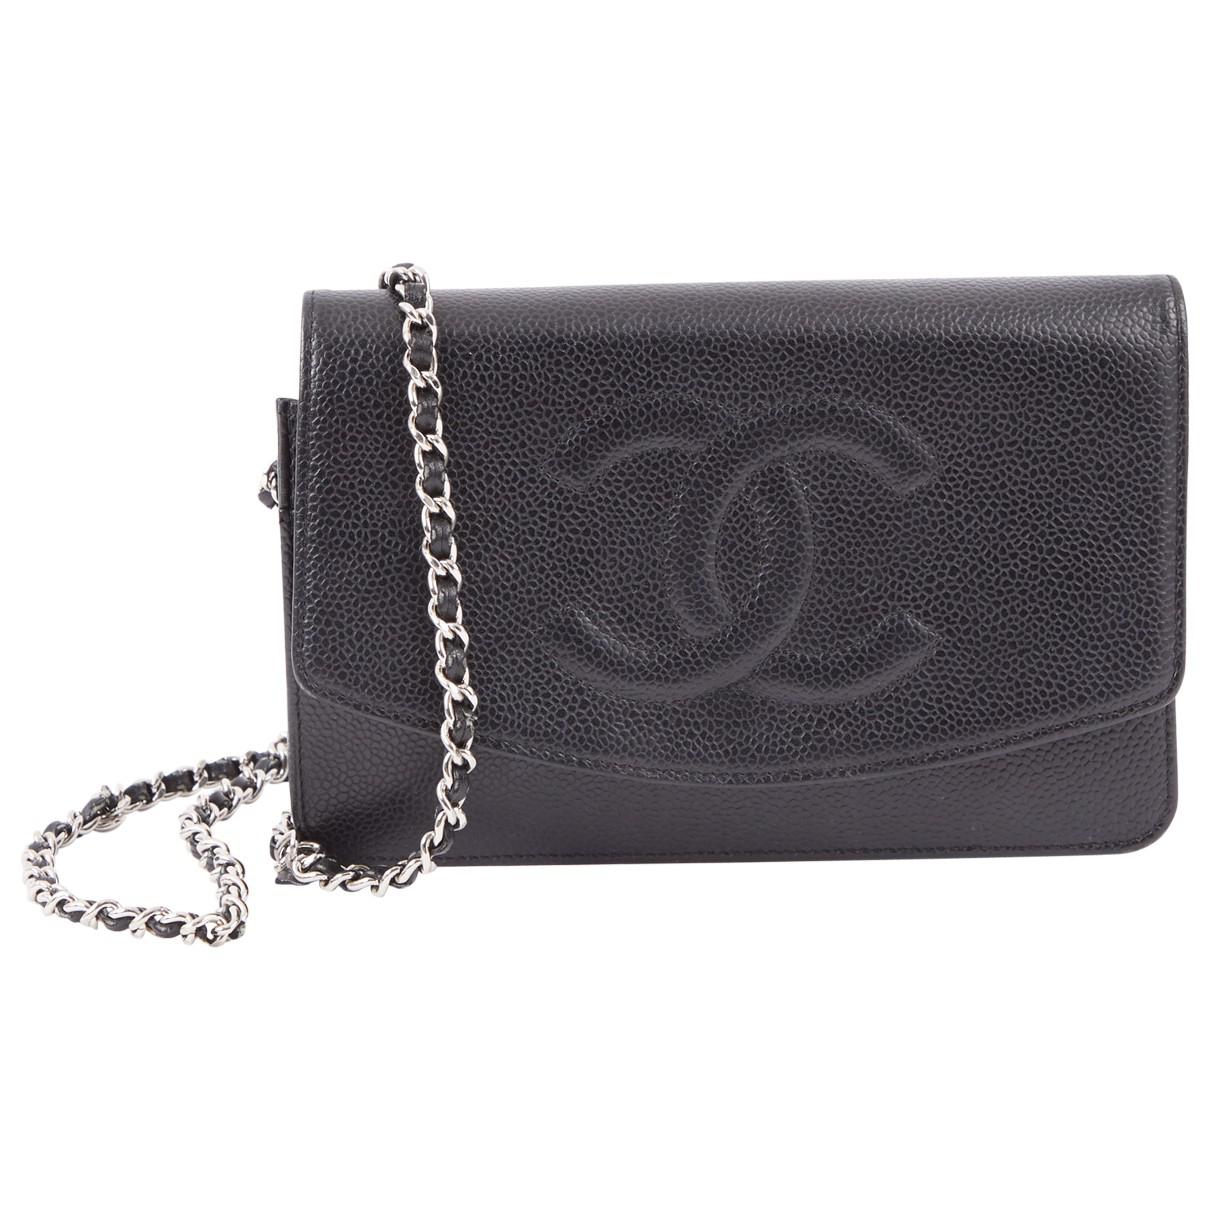 Chanel Leather Crossbody Bag in Black - Lyst